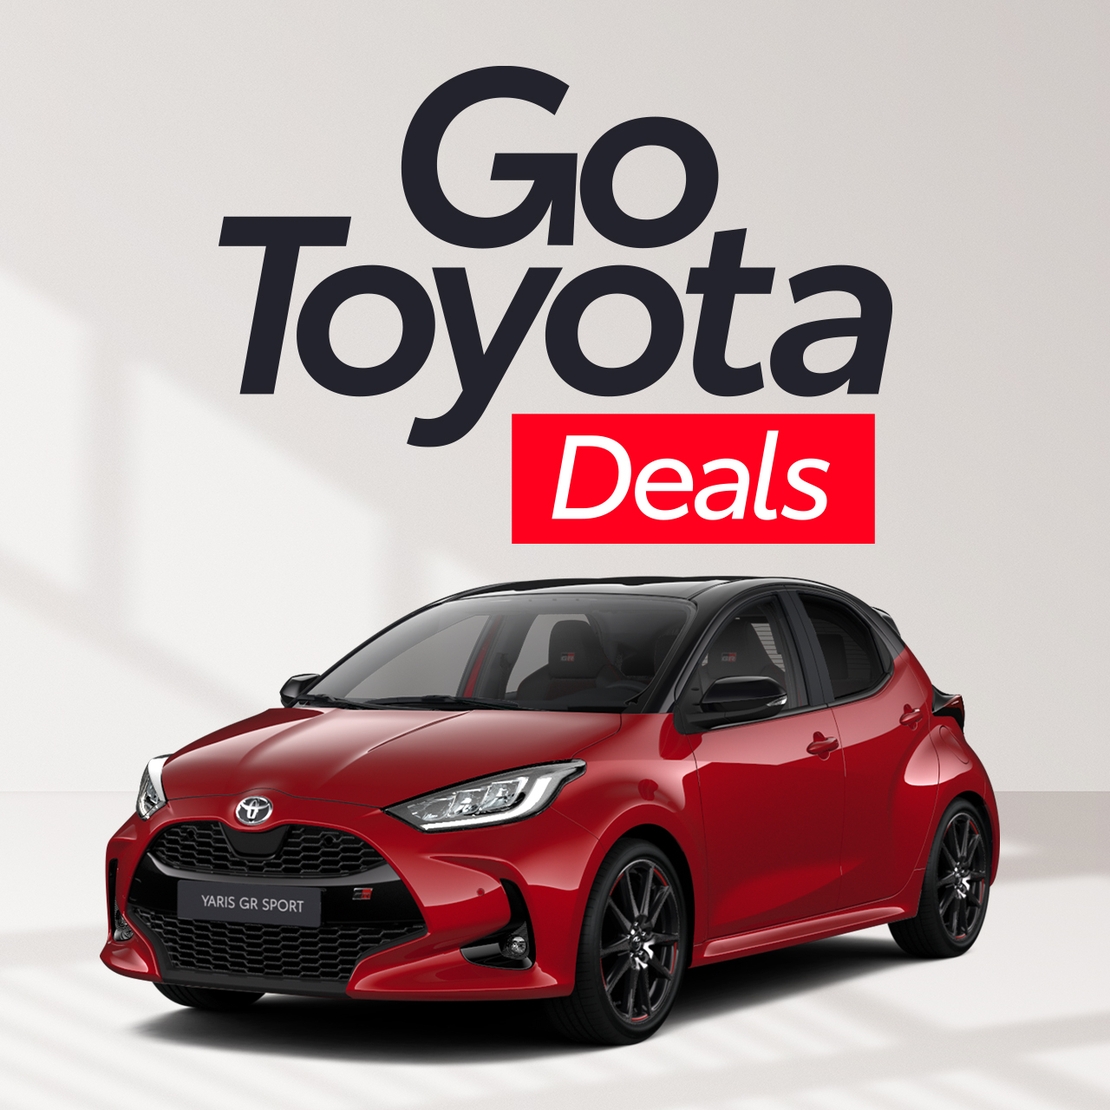 Toyota-Yaris-GoToyotaDeals-logo-PL